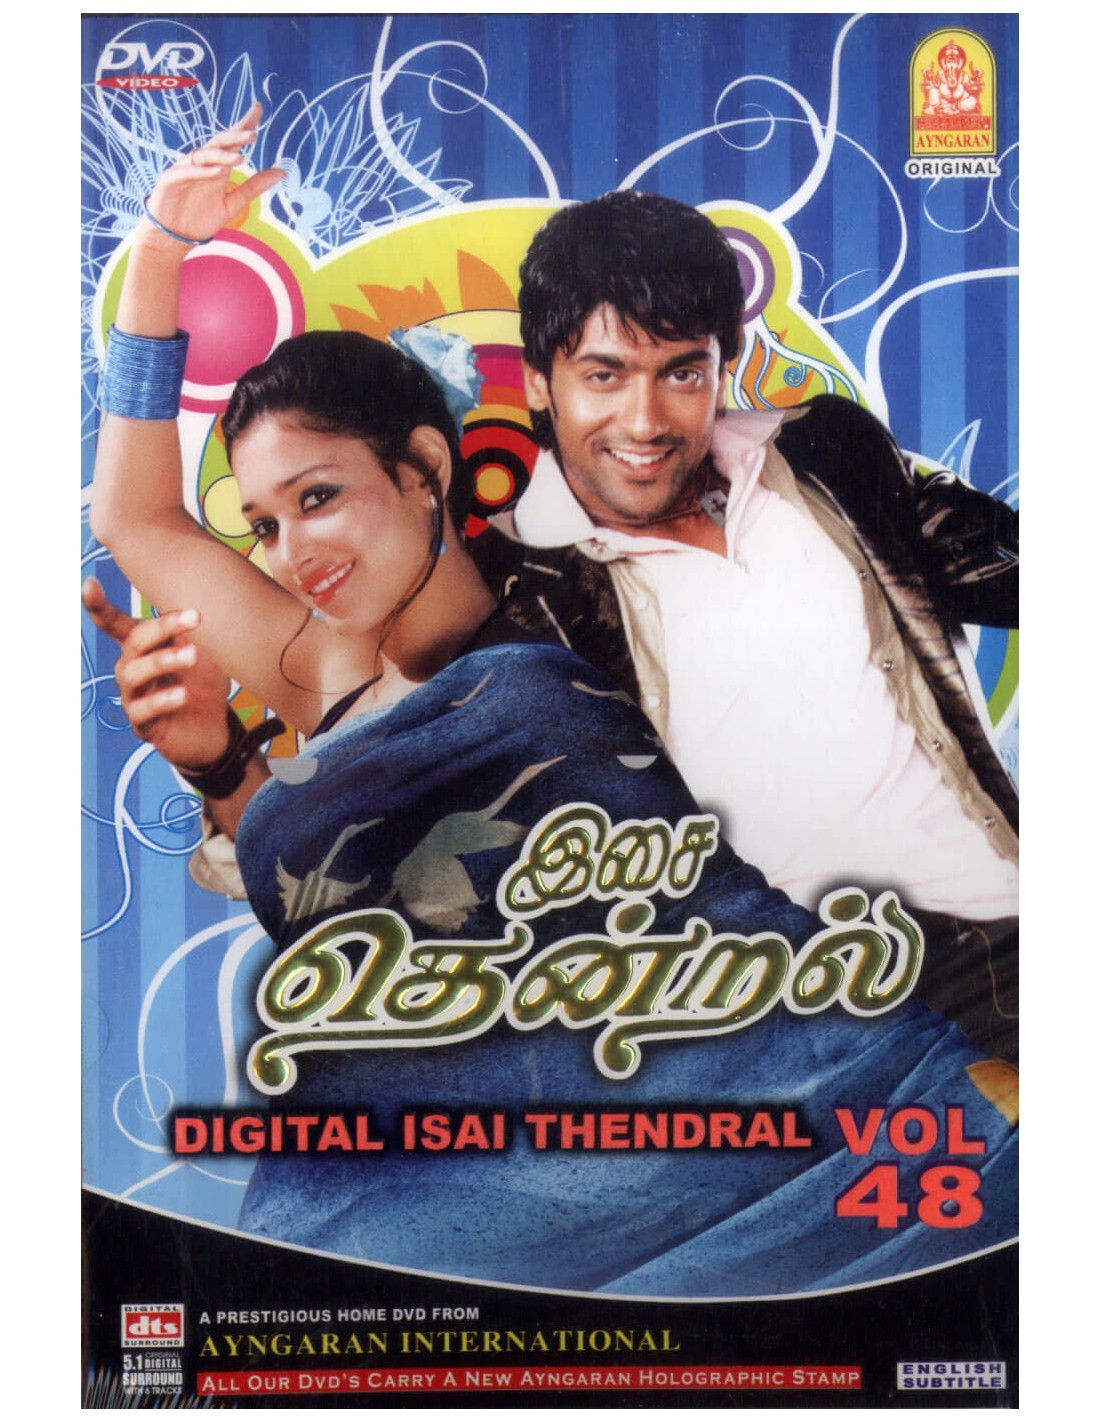 Digital Isai Thendral Vol. 48 DVD - Tamil